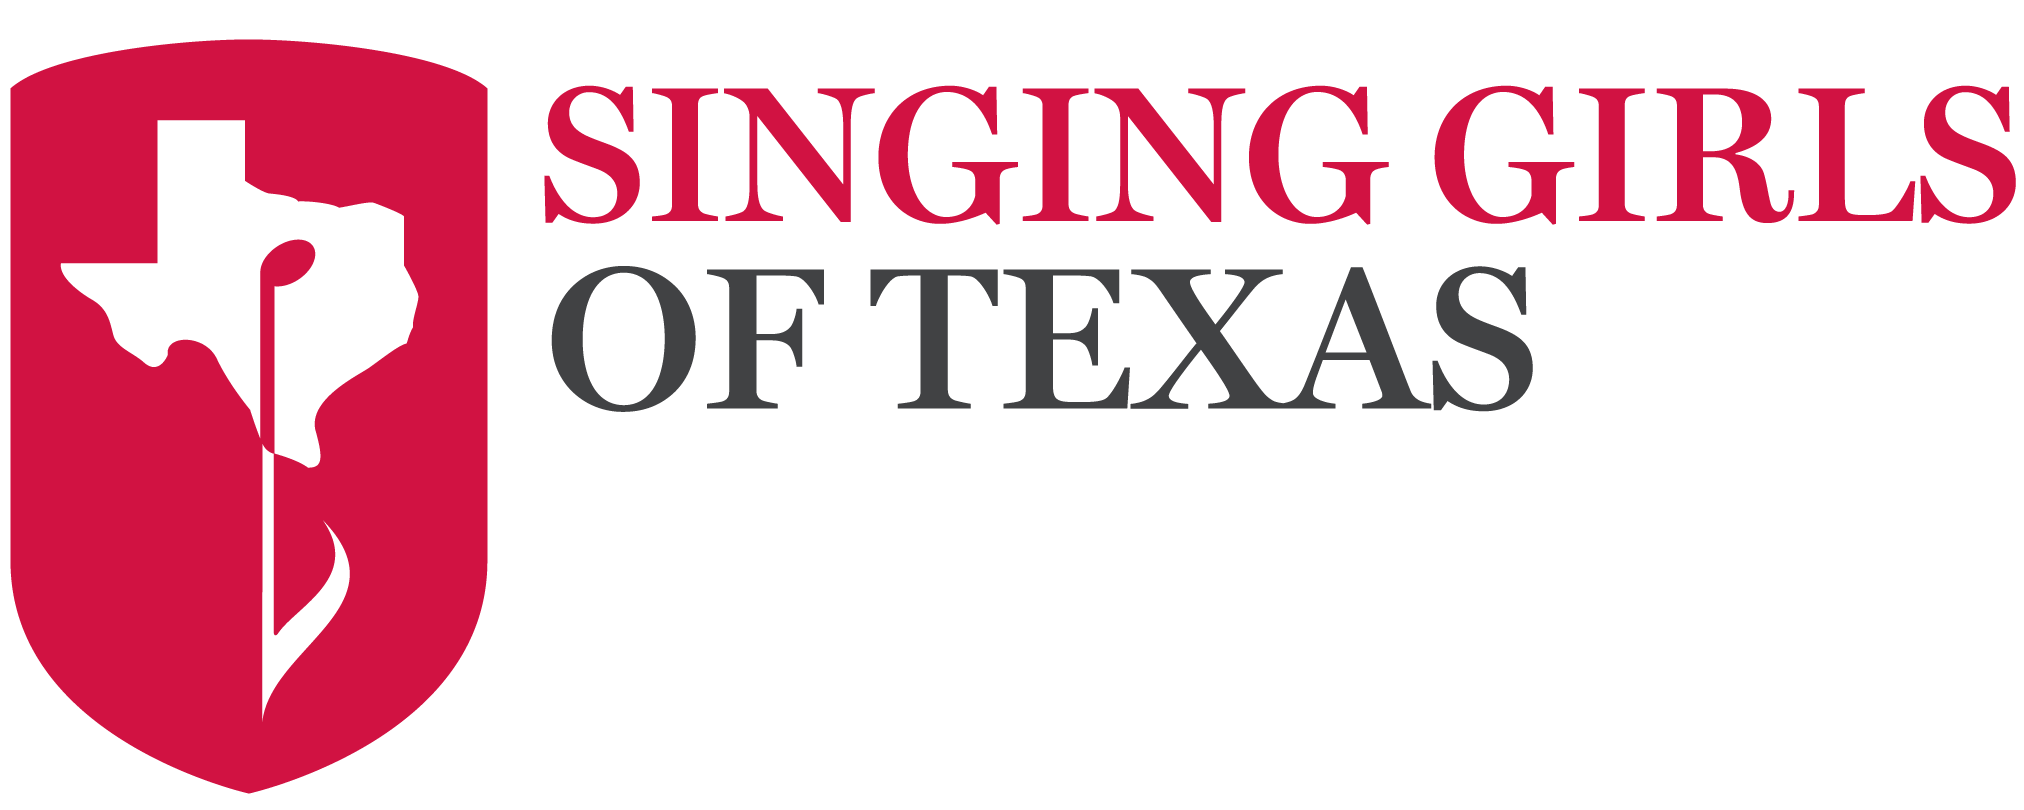 Singing Girls of Texas Homepage